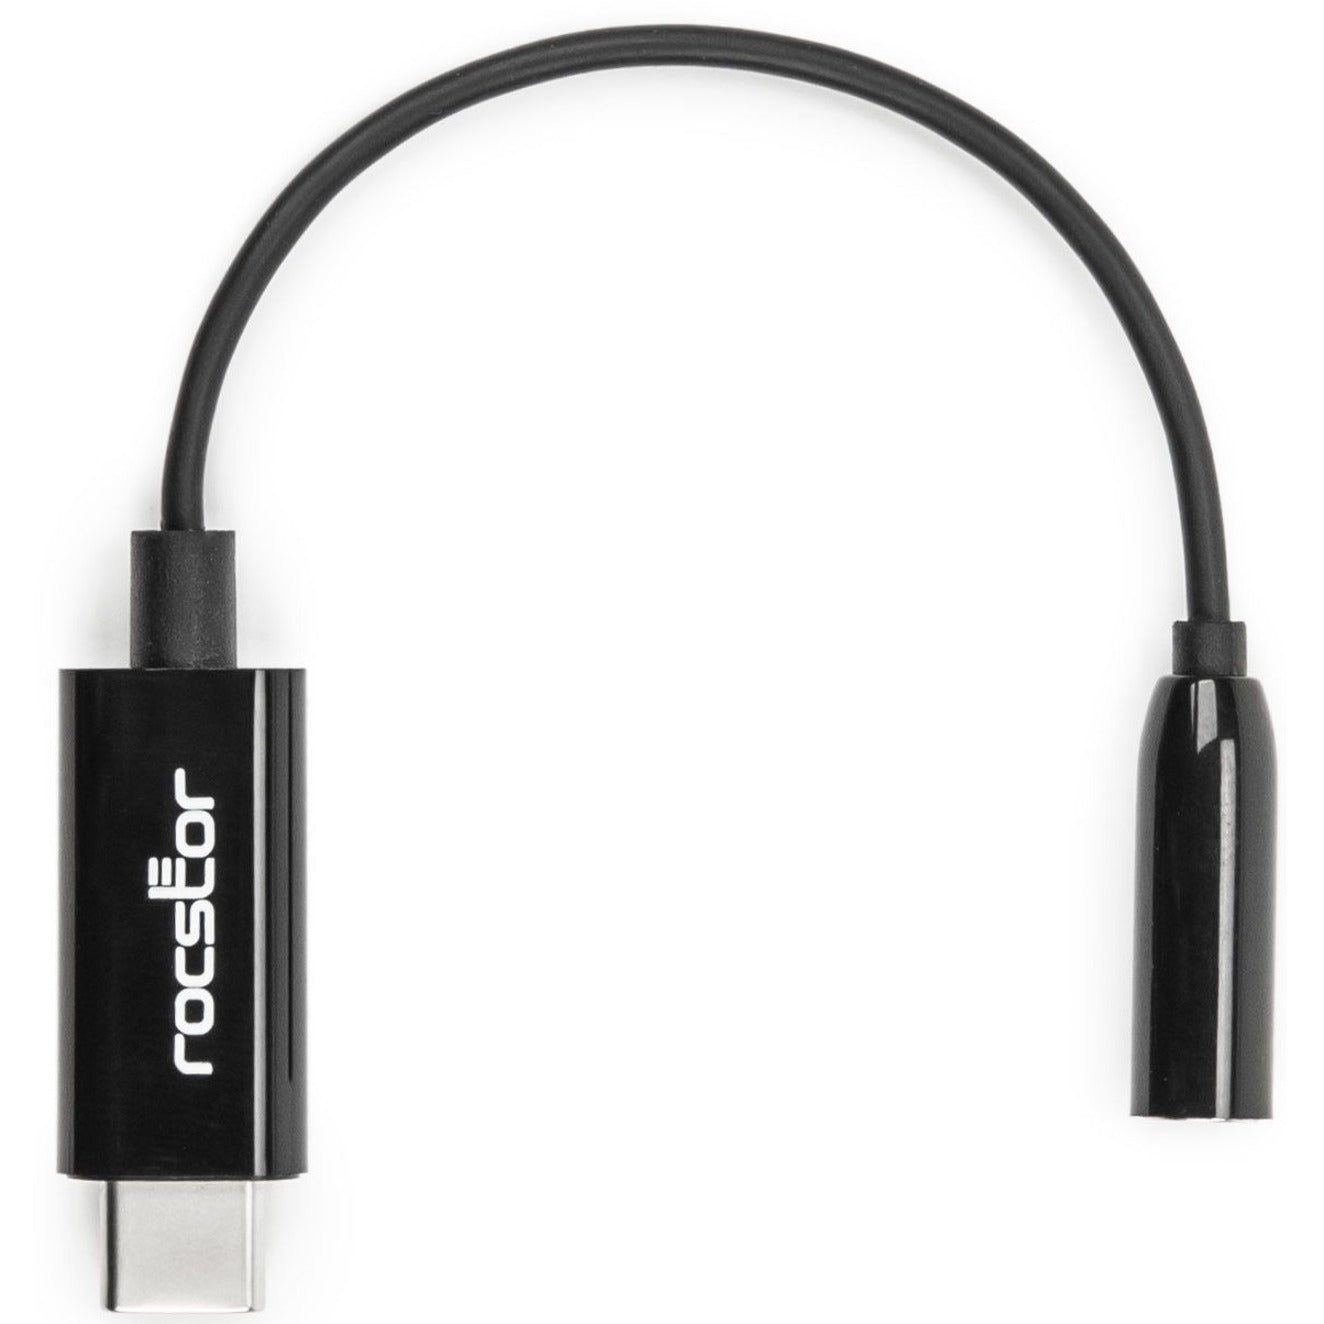 Rocstor USB C to 3.5mm Audio Adapter